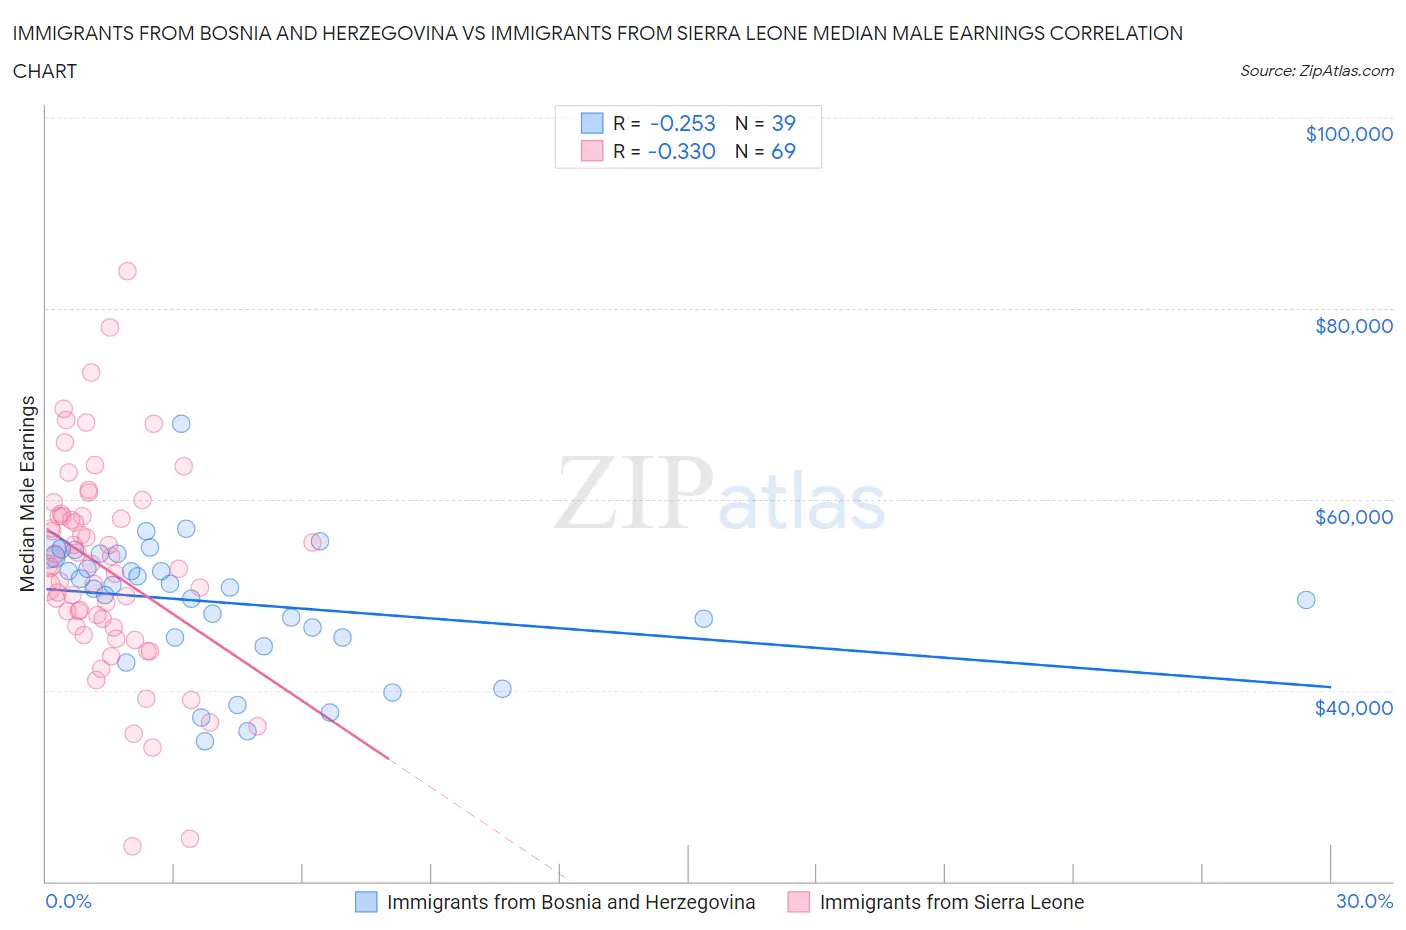 Immigrants from Bosnia and Herzegovina vs Immigrants from Sierra Leone Median Male Earnings